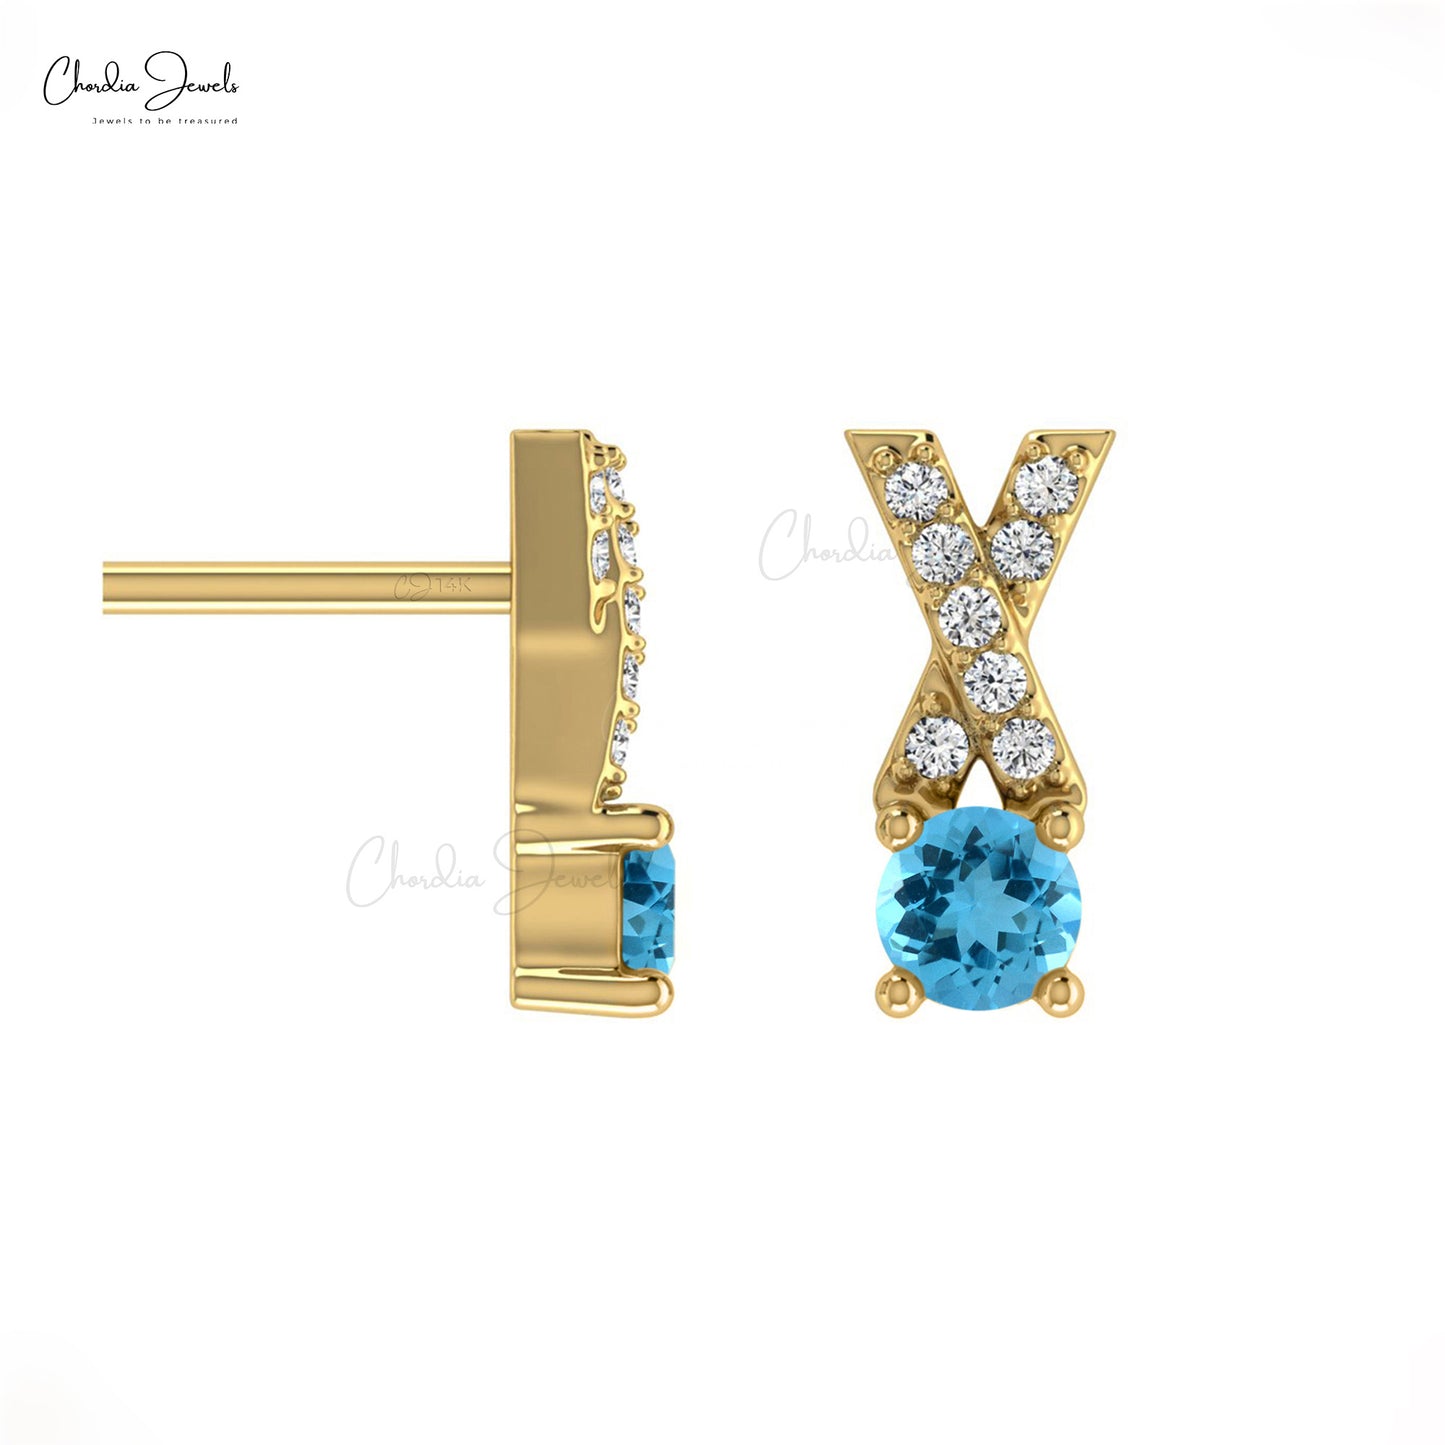 Natural Swiss Blue Topaz Studs Earring In 14k Solid Gold With White Diamond Criss Cross Earring 5mm Round Cut Handmade Gemstone Earring For Women's